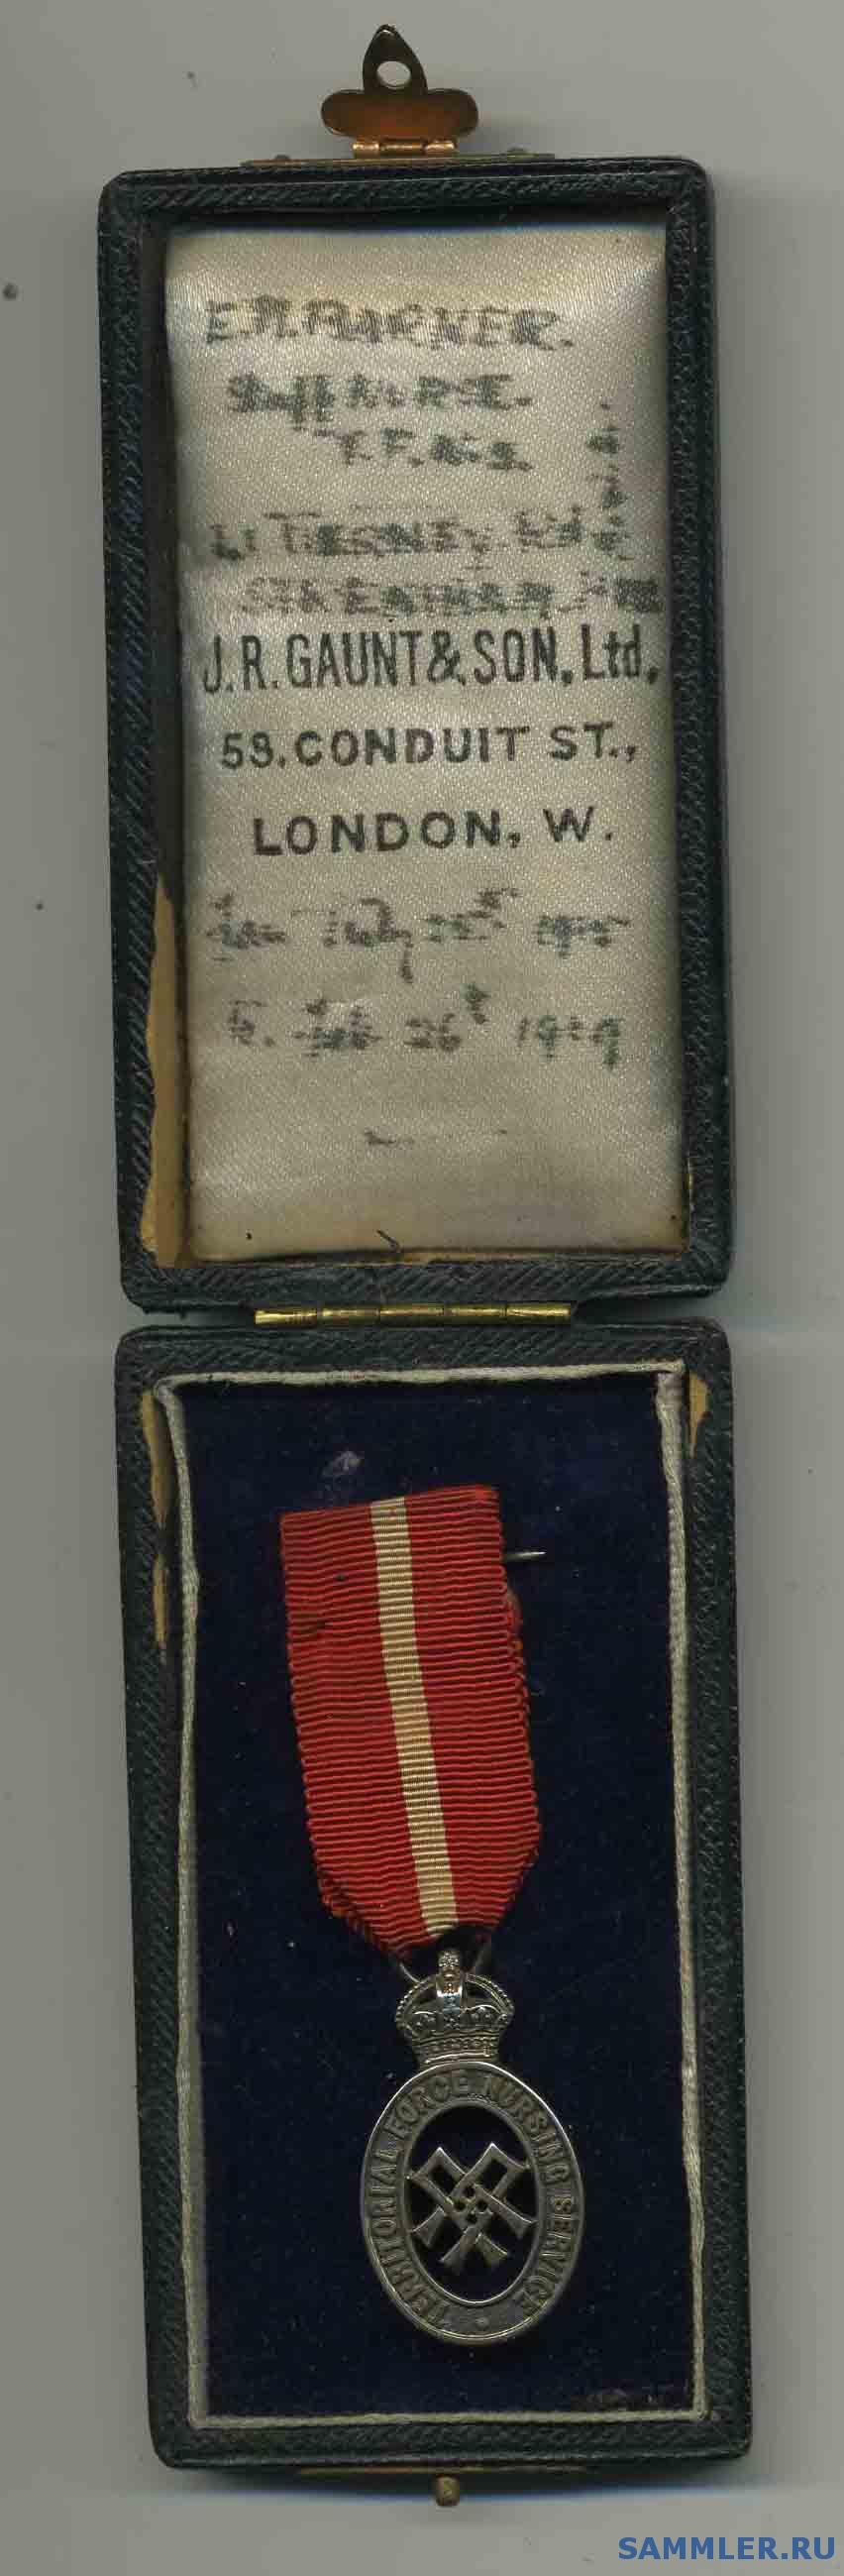 Territorial_Force_Nursing_Service_Medal.jpg